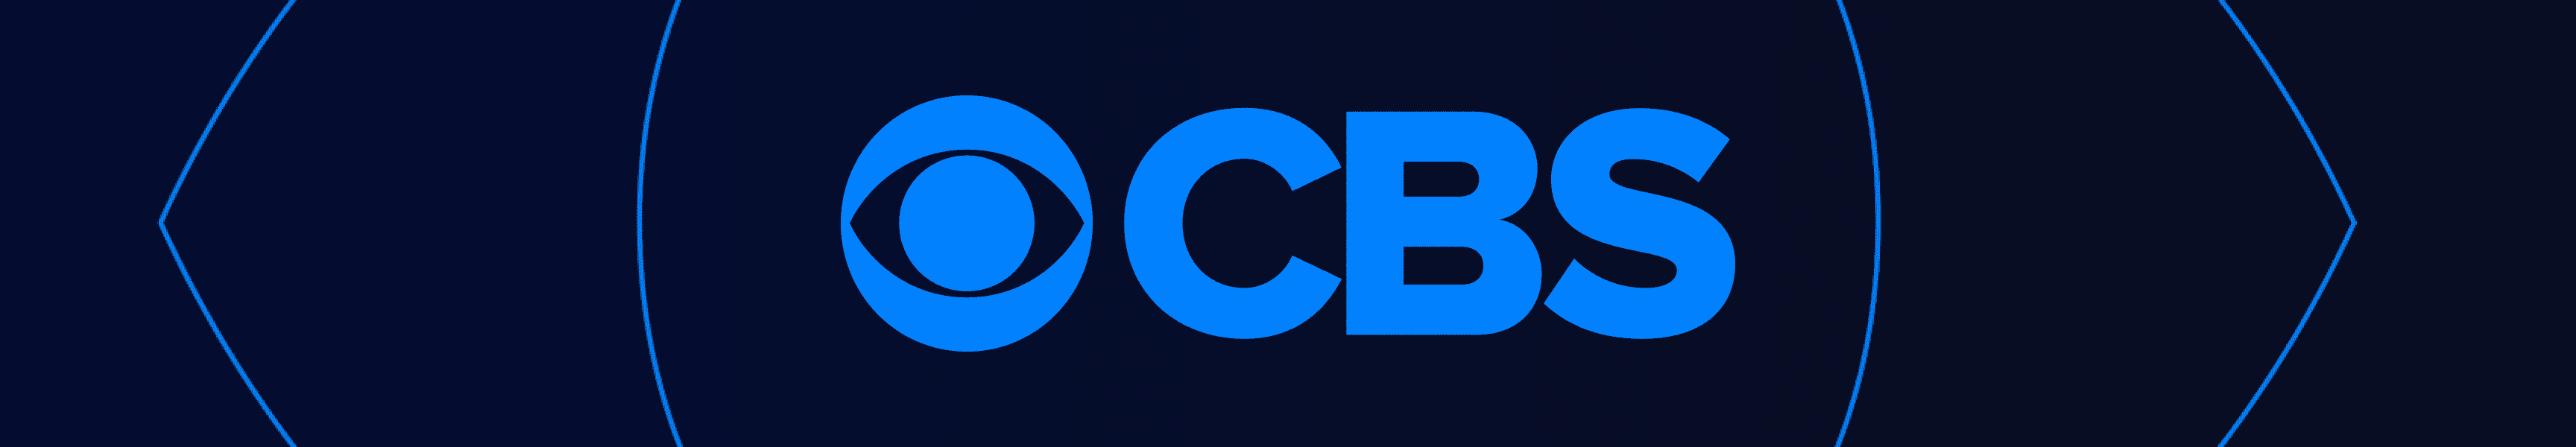 CBS Entertainment Stickers